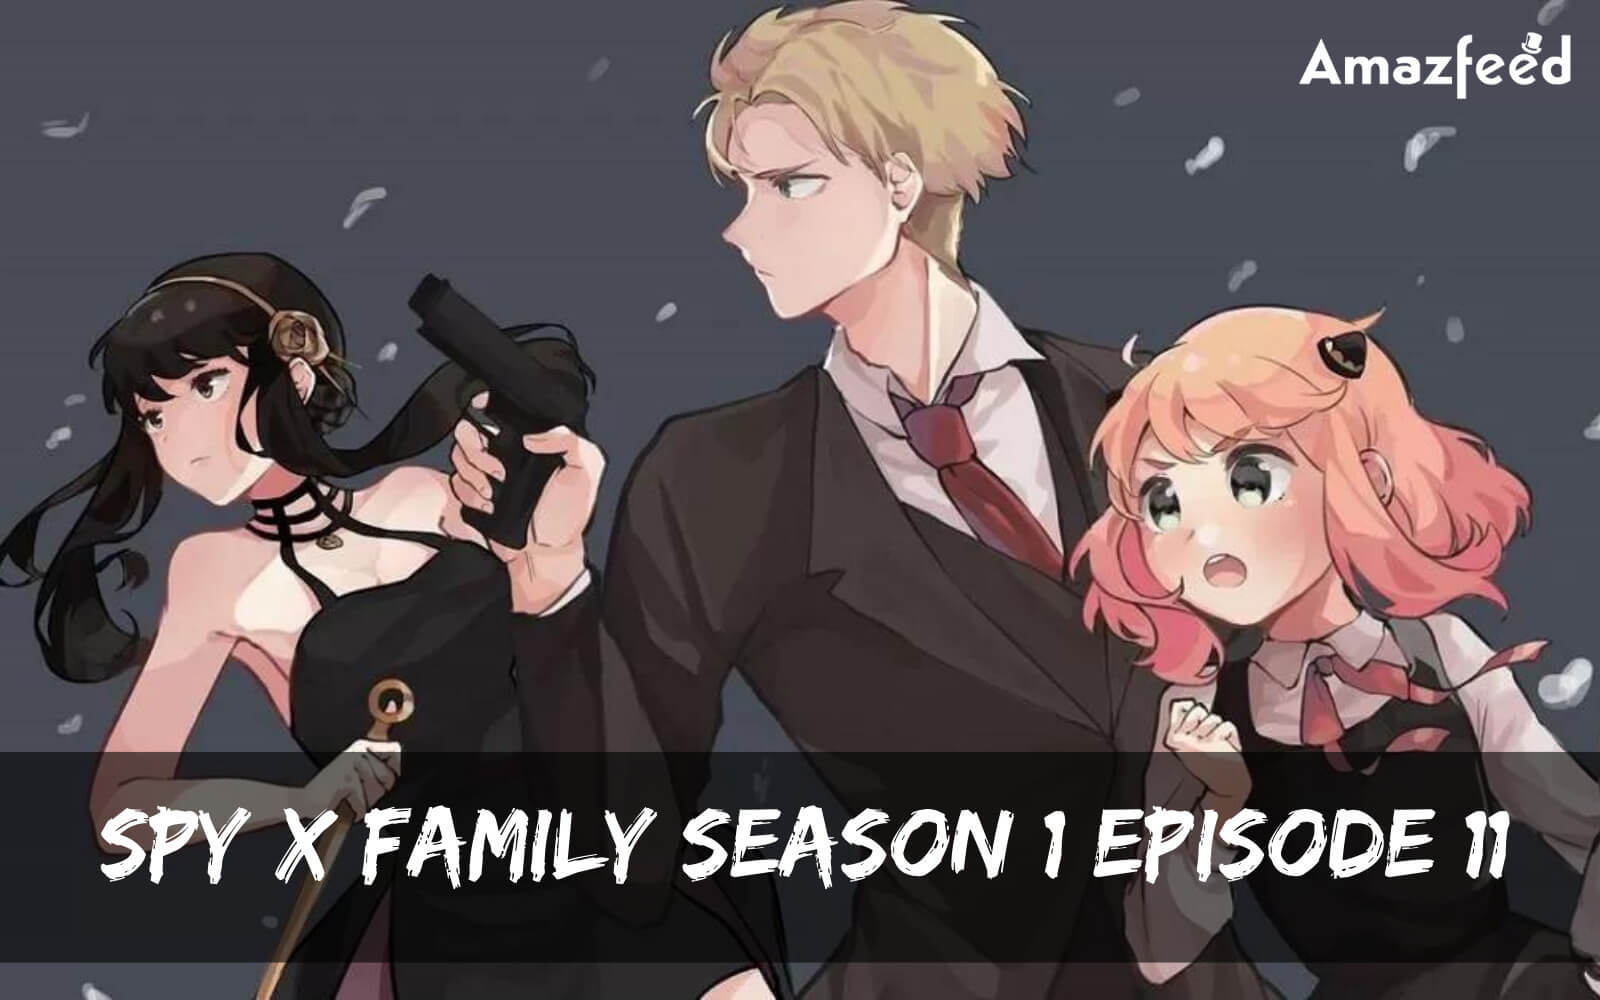 Spy x Family Season 1 Episode 11 release date